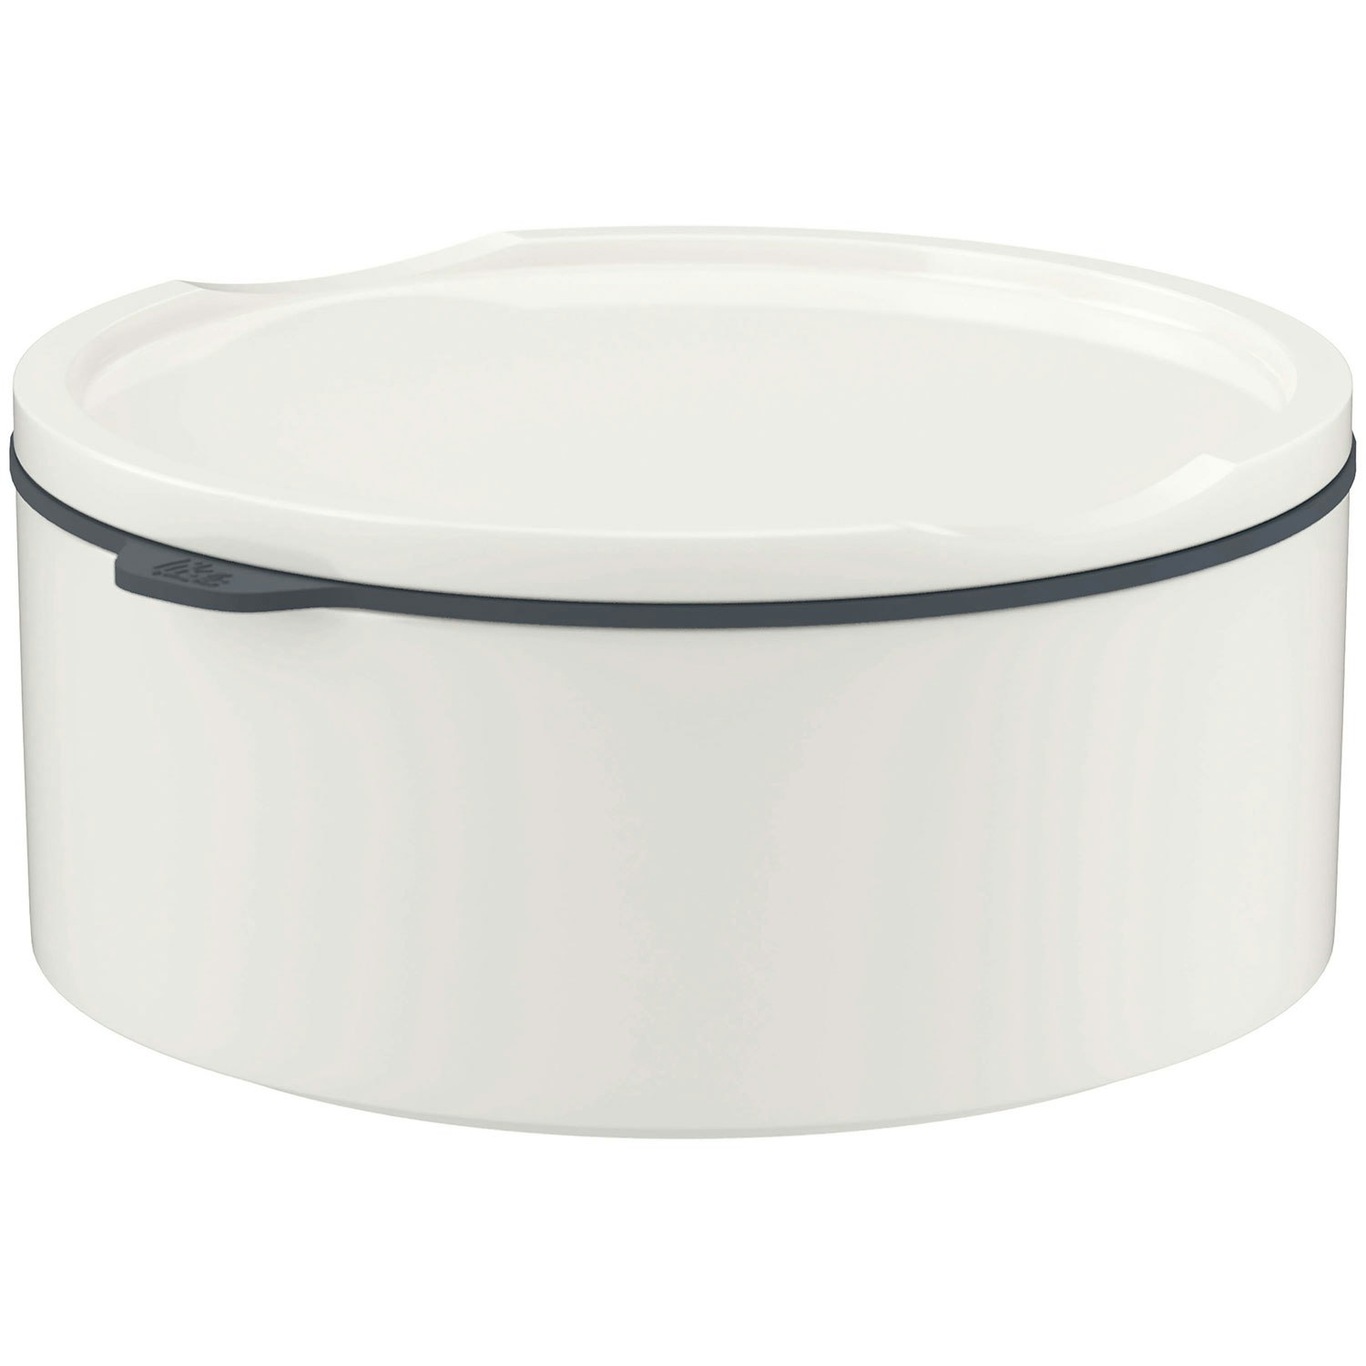 ToGo&ToStay Lunch Box White, 13x6 cm - Villeroy & Boch @ RoyalDesign